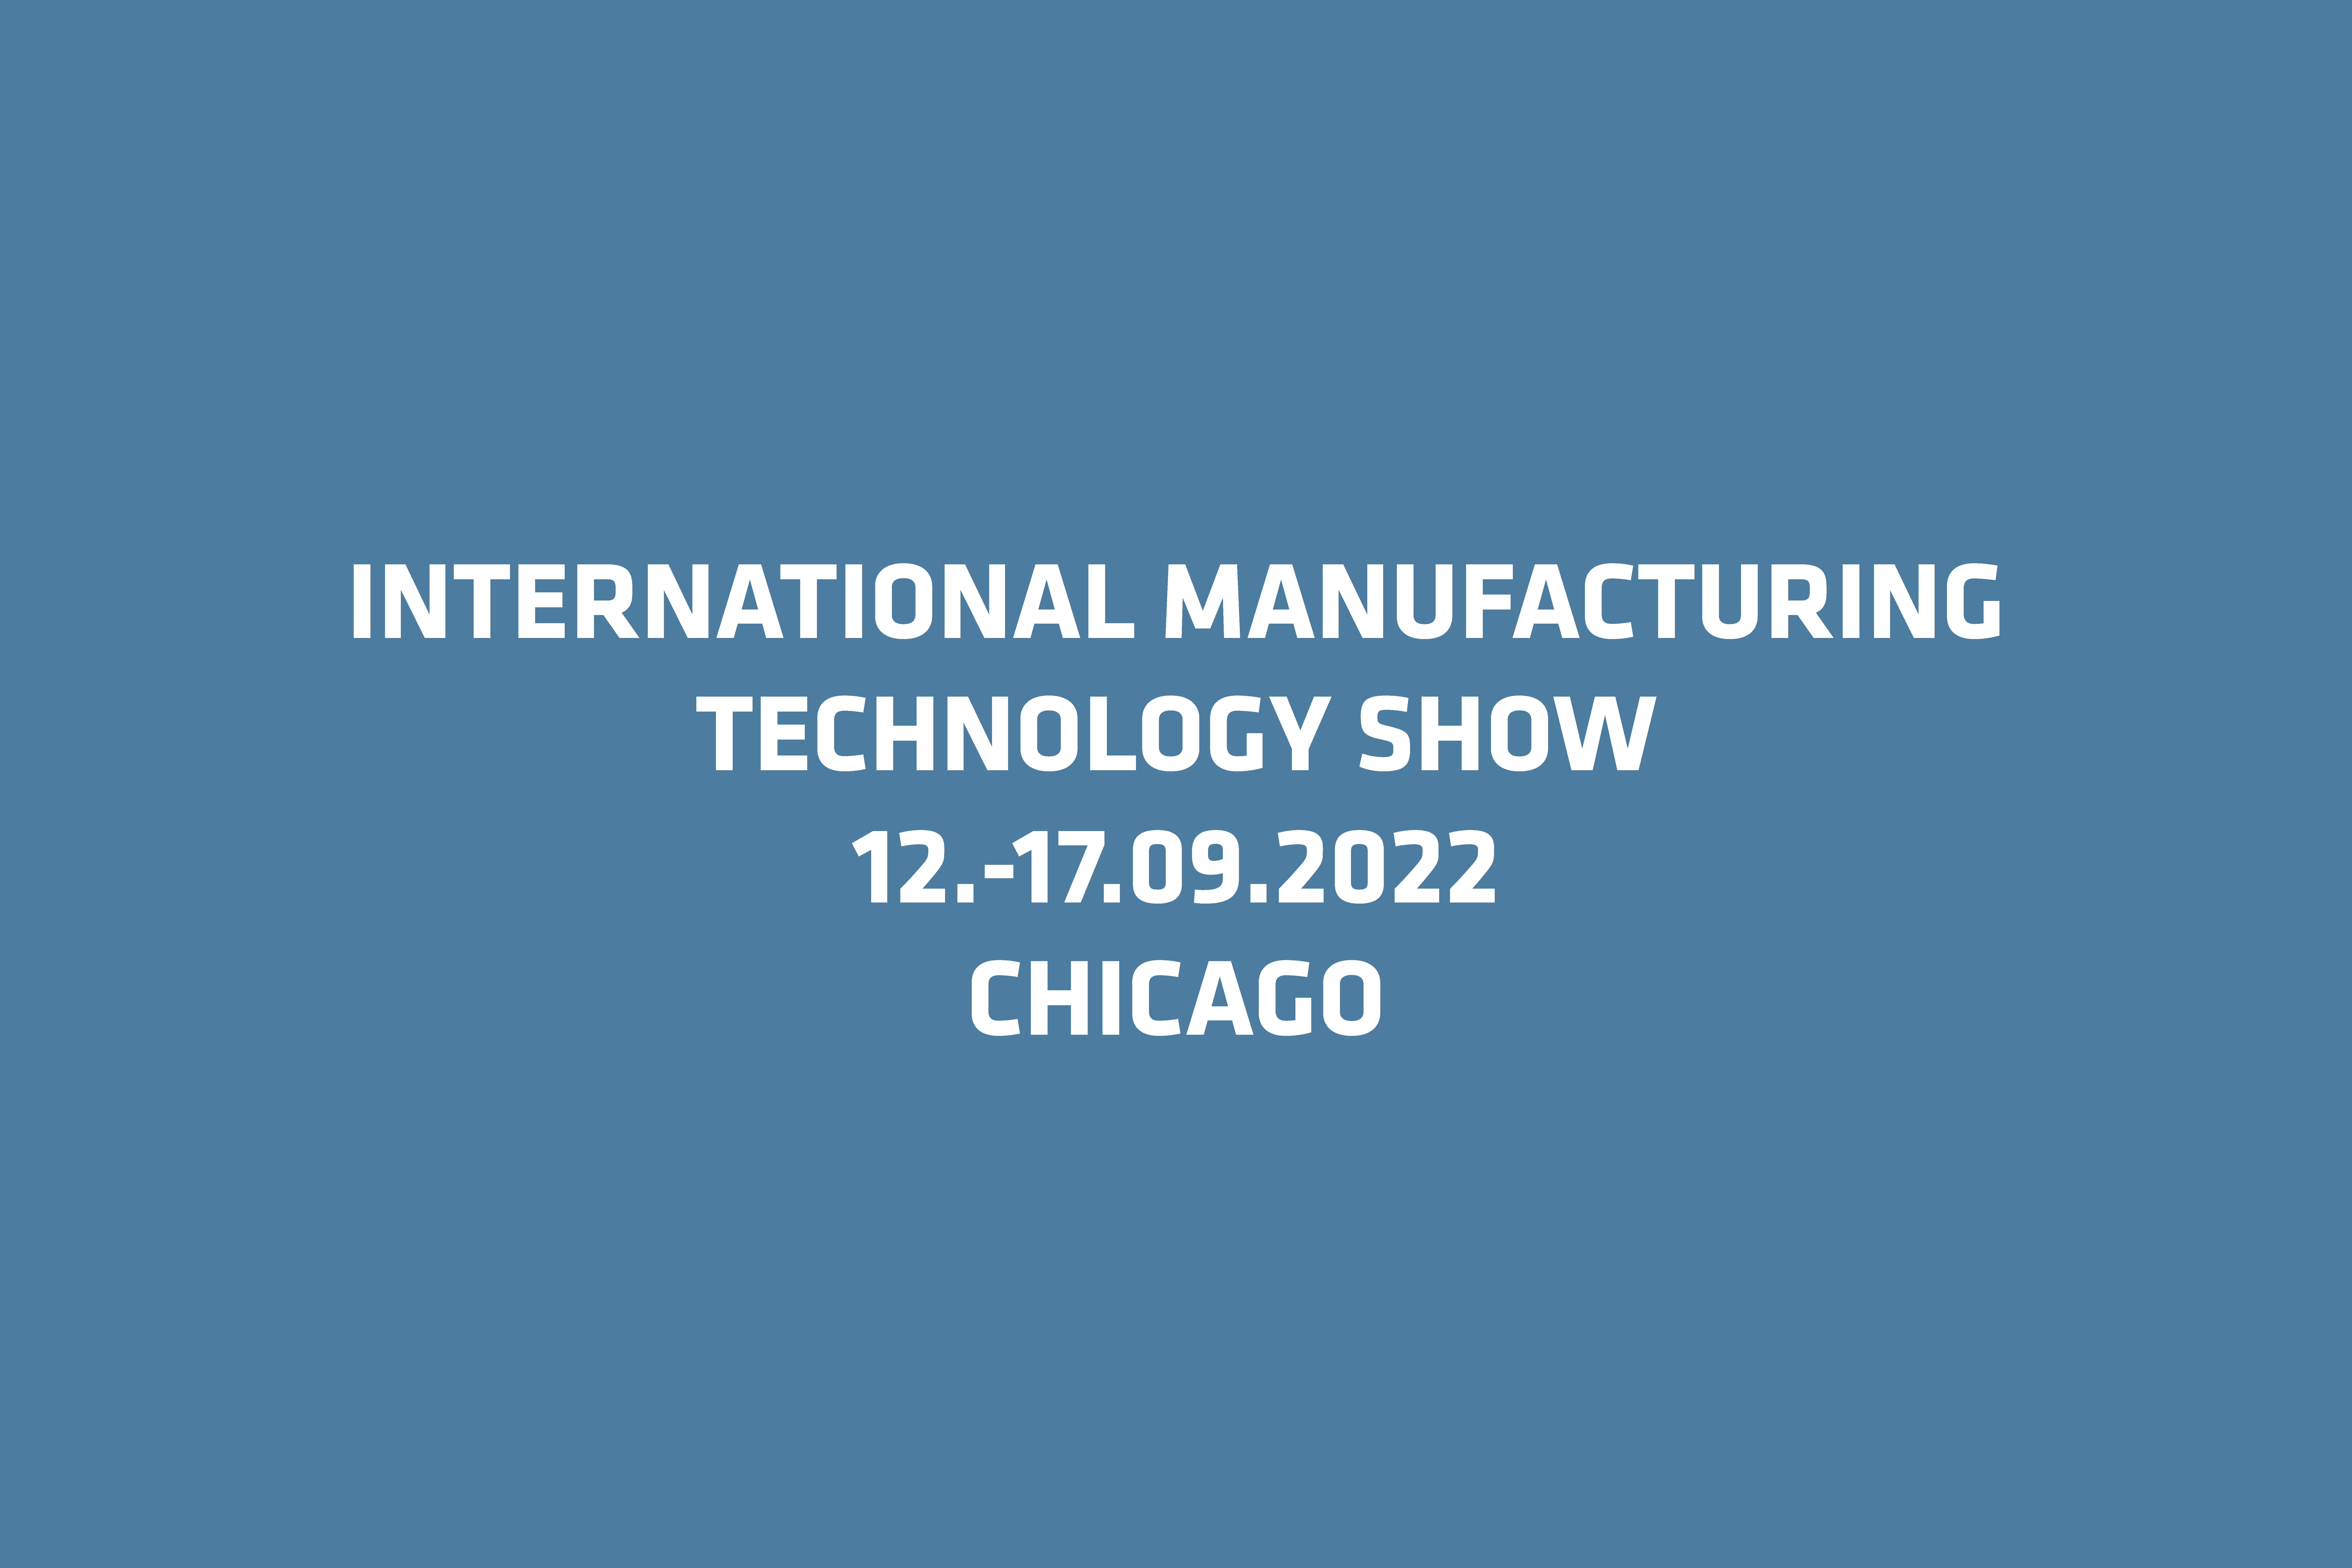 International Manufacturing Technology Show 2022